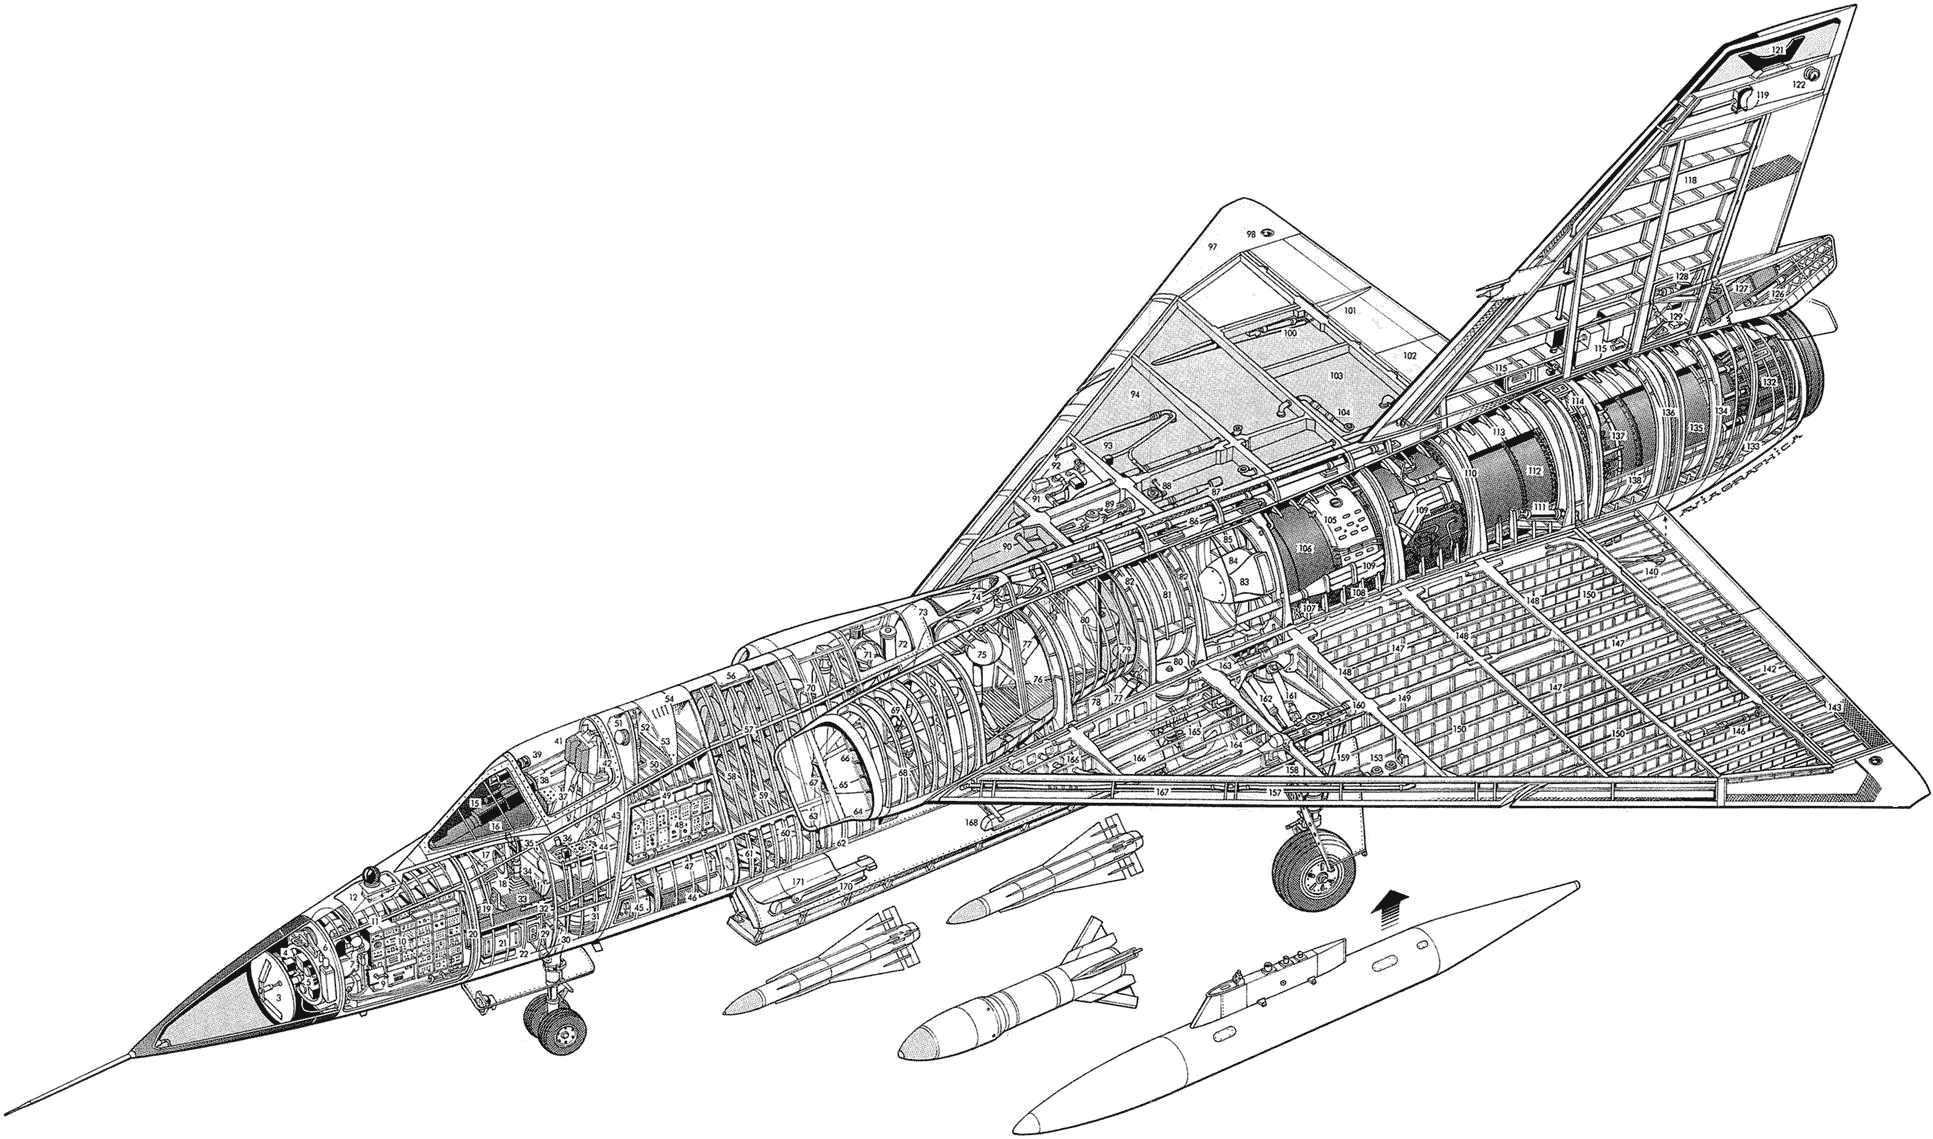 Convair F-106 Delta Dart cutaway drawing